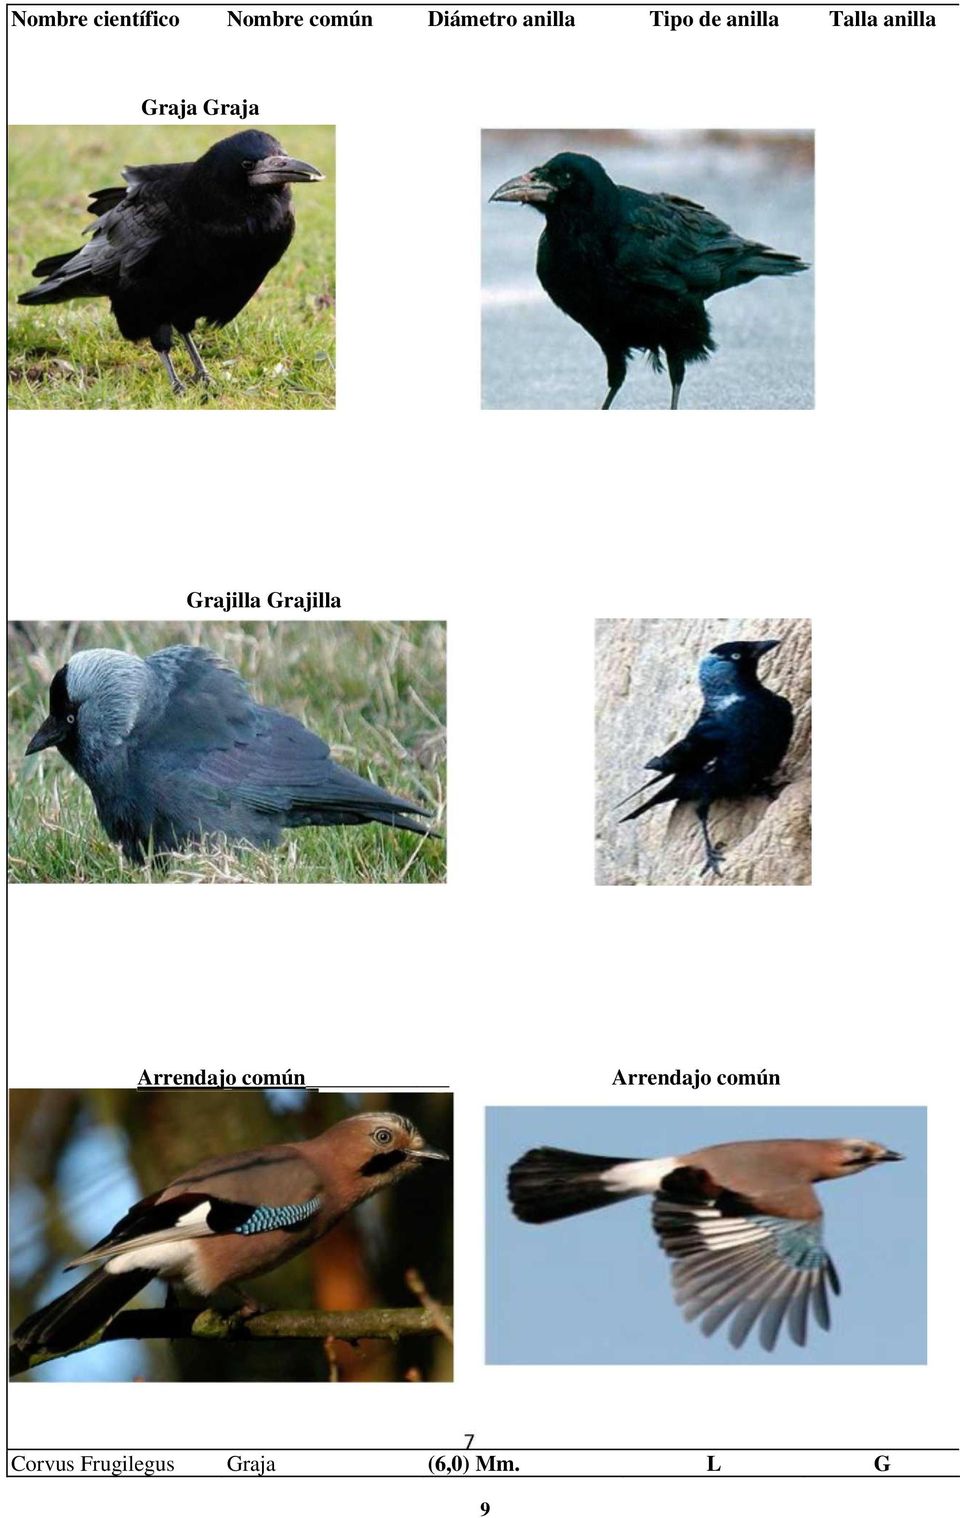 Arrendajo común Corvus